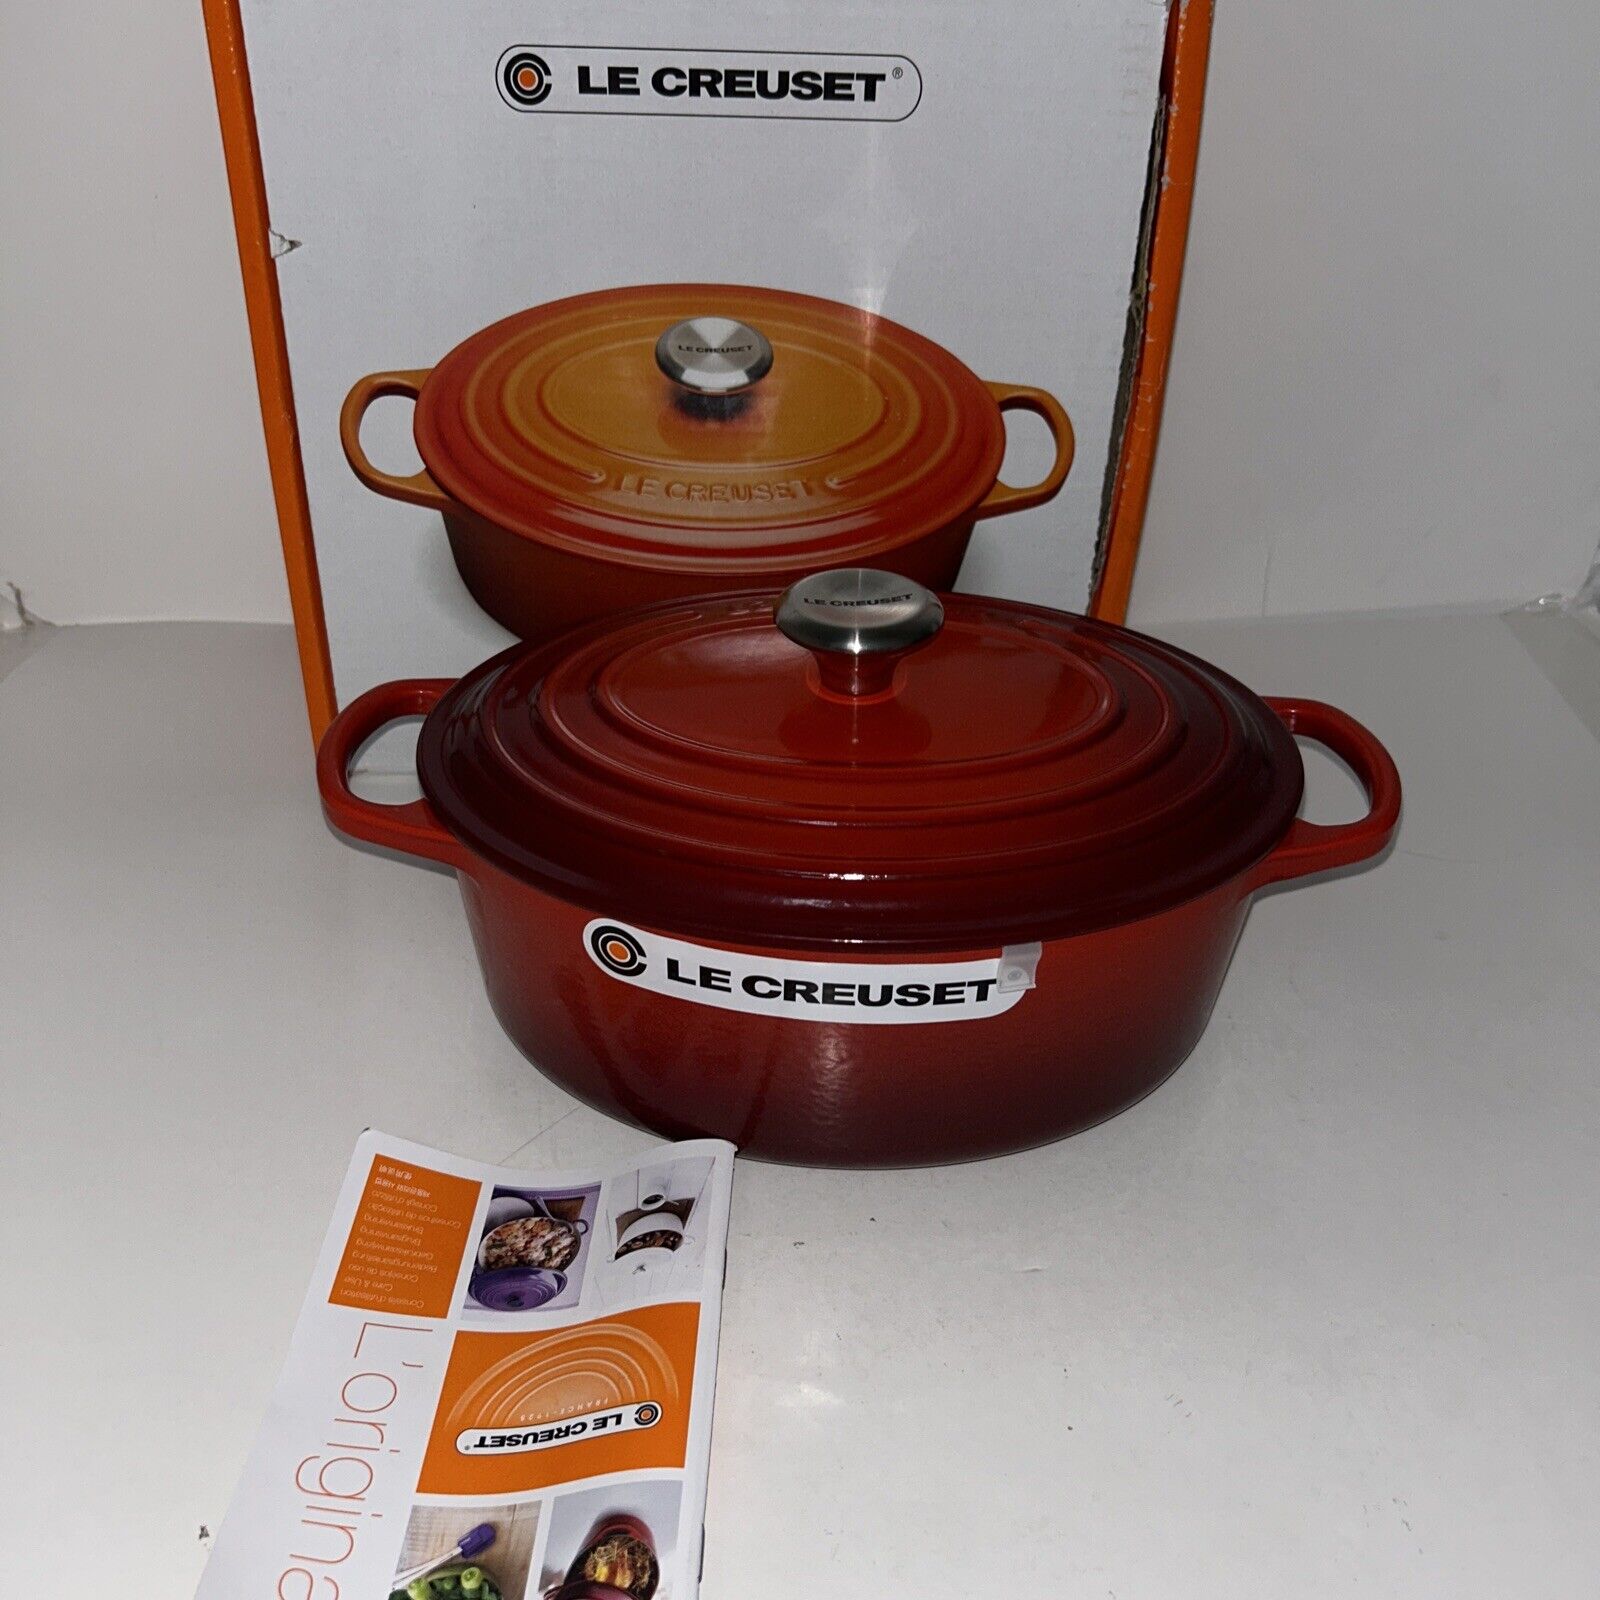 Le Creuset Signature Oval Cast Iron 2.75 Quart Oven, Cerise Red - NEW 